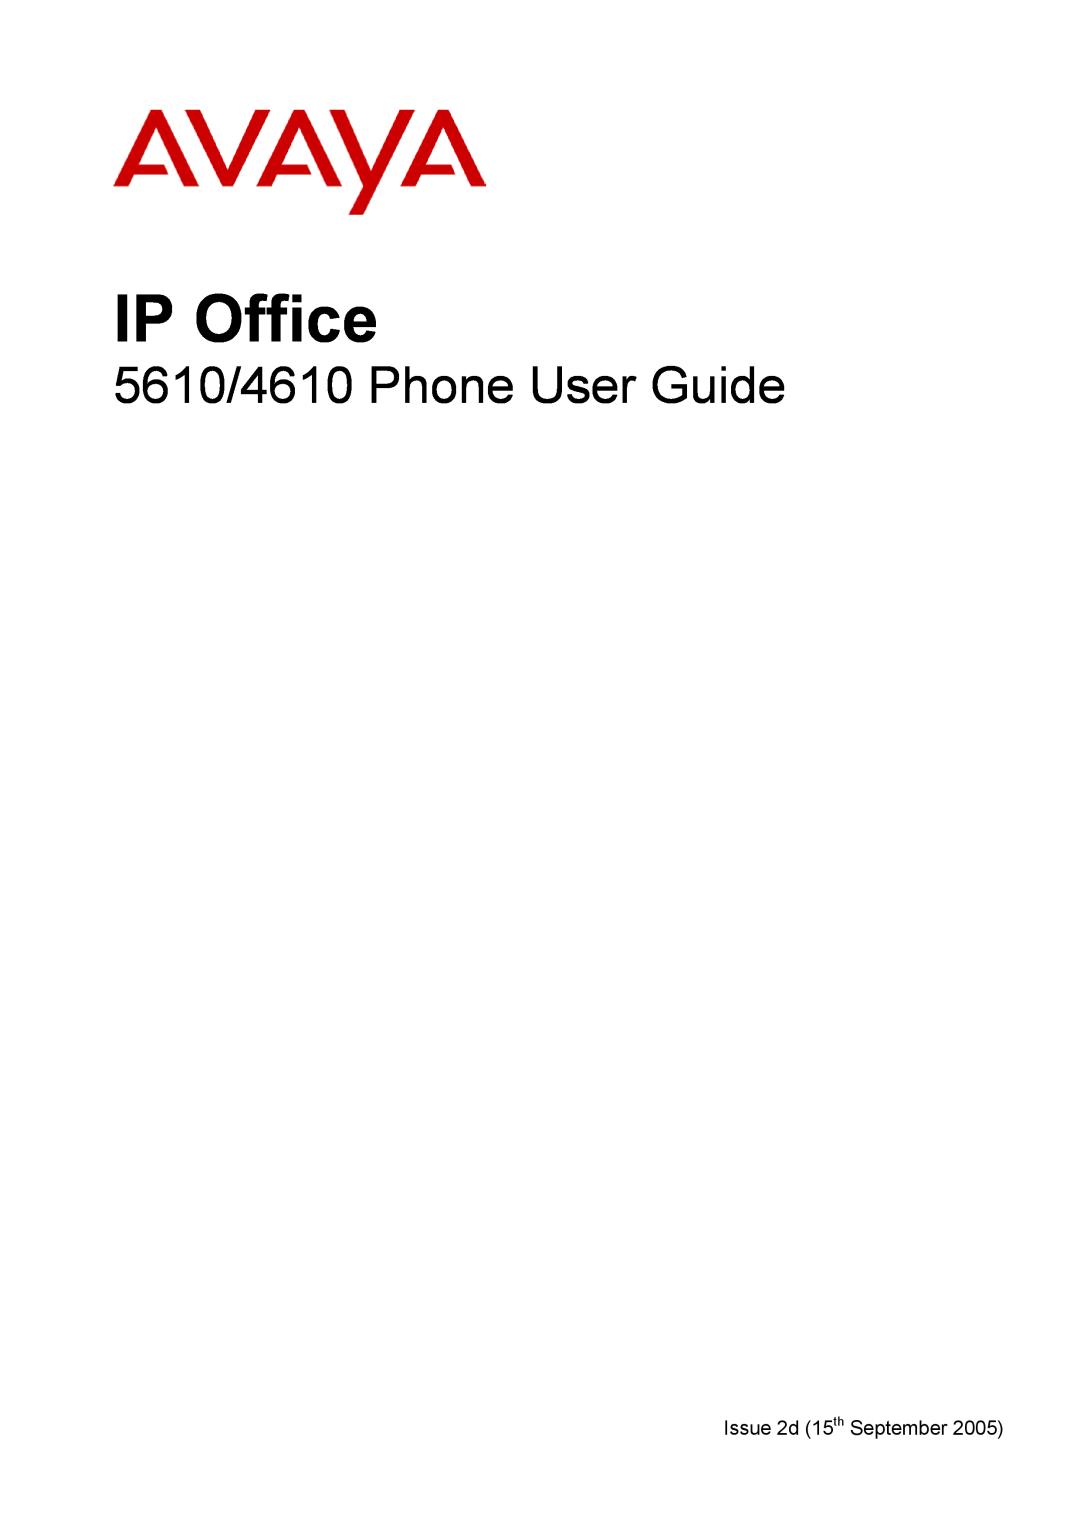 Avaya manual IP Office, 5610/4610 Phone User Guide 